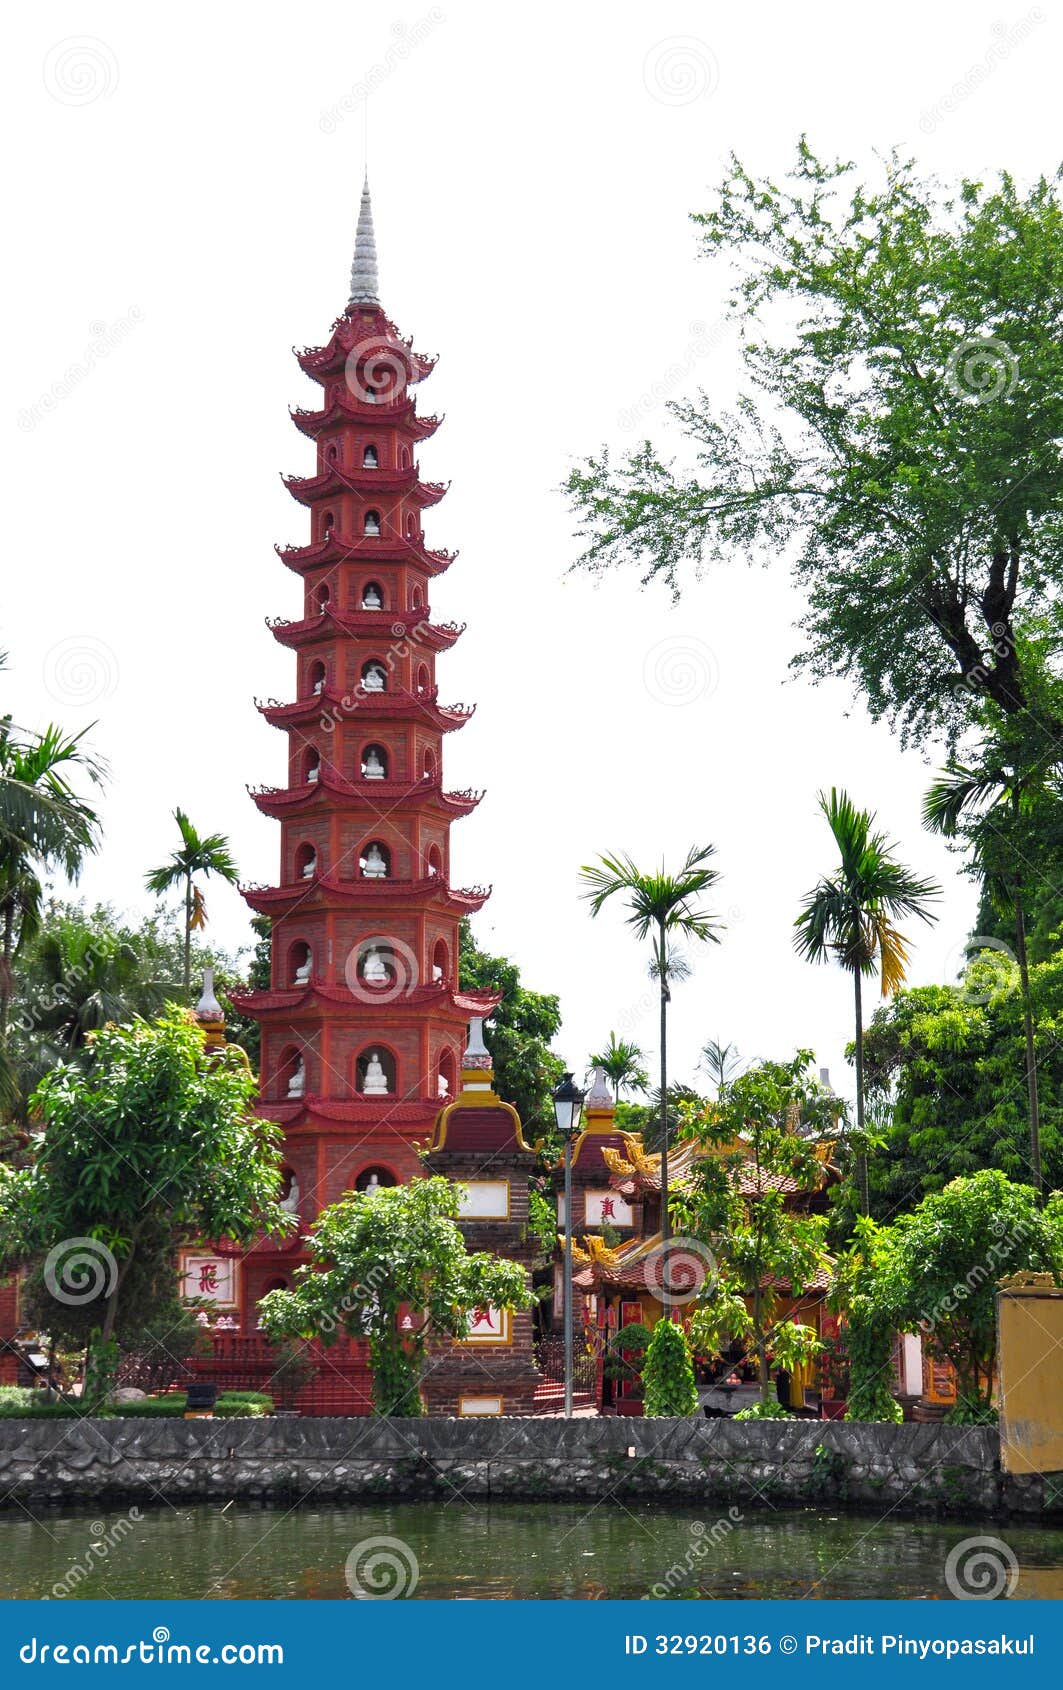 tran quoc pagoda in hanoi